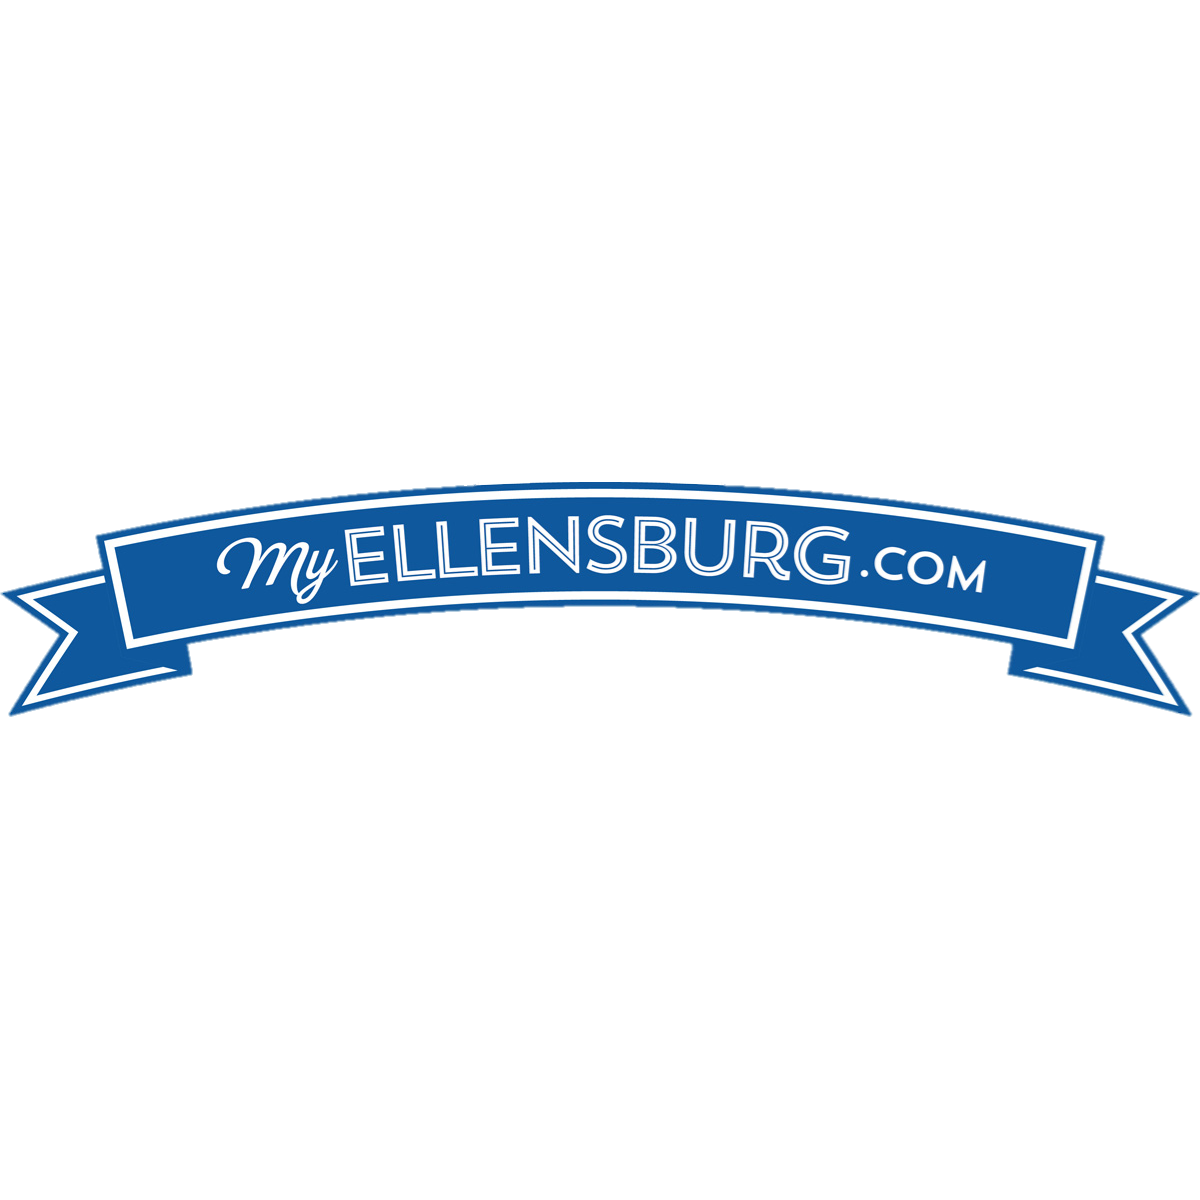 My Ellensburg